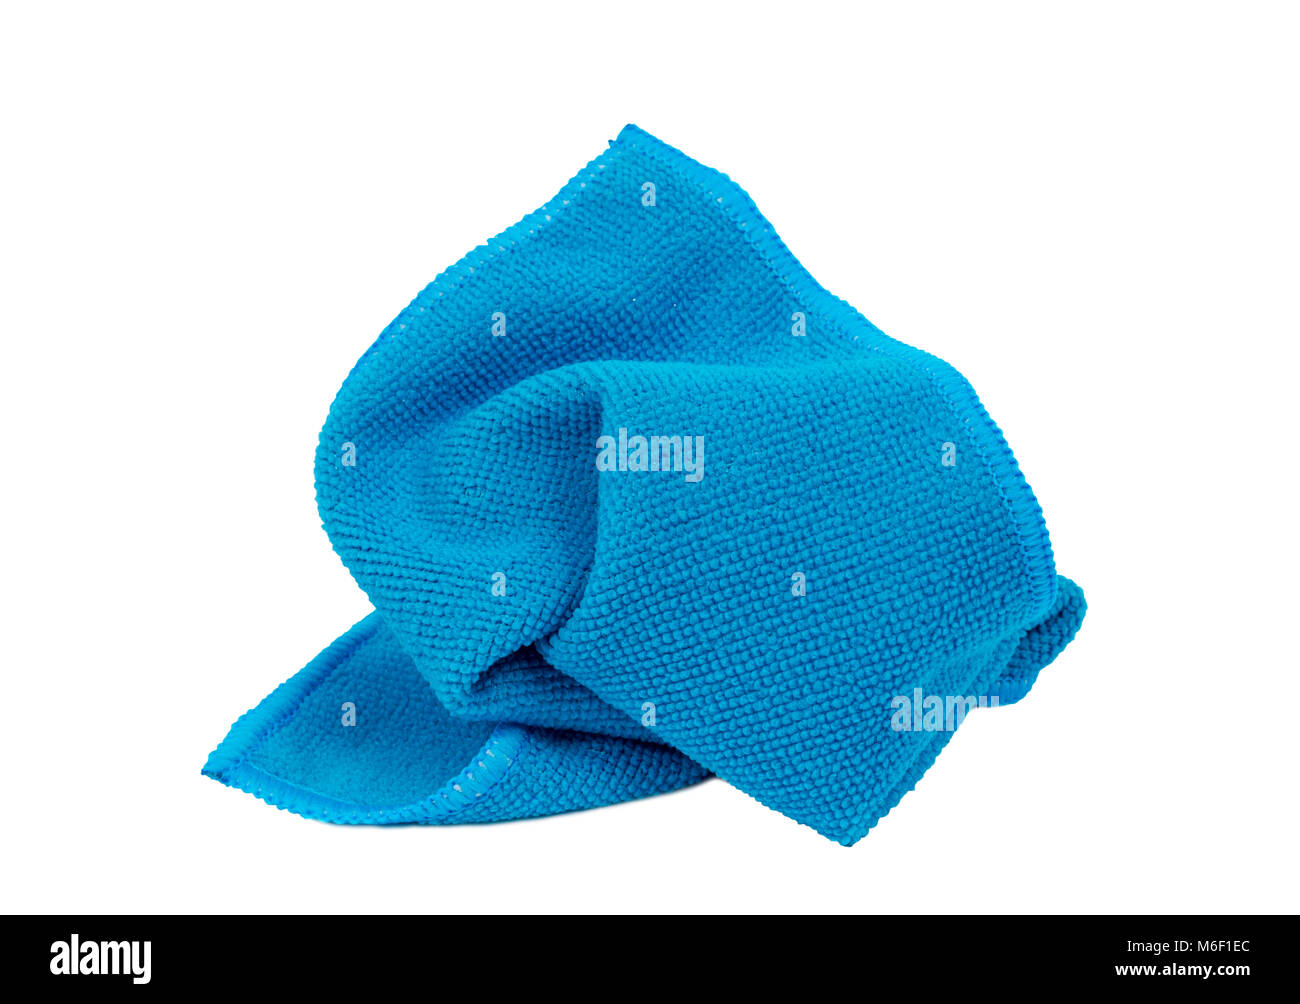 https://c8.alamy.com/comp/M6F1EC/horizontal-shot-of-a-crumpled-blue-washcloth-on-a-white-background-M6F1EC.jpg